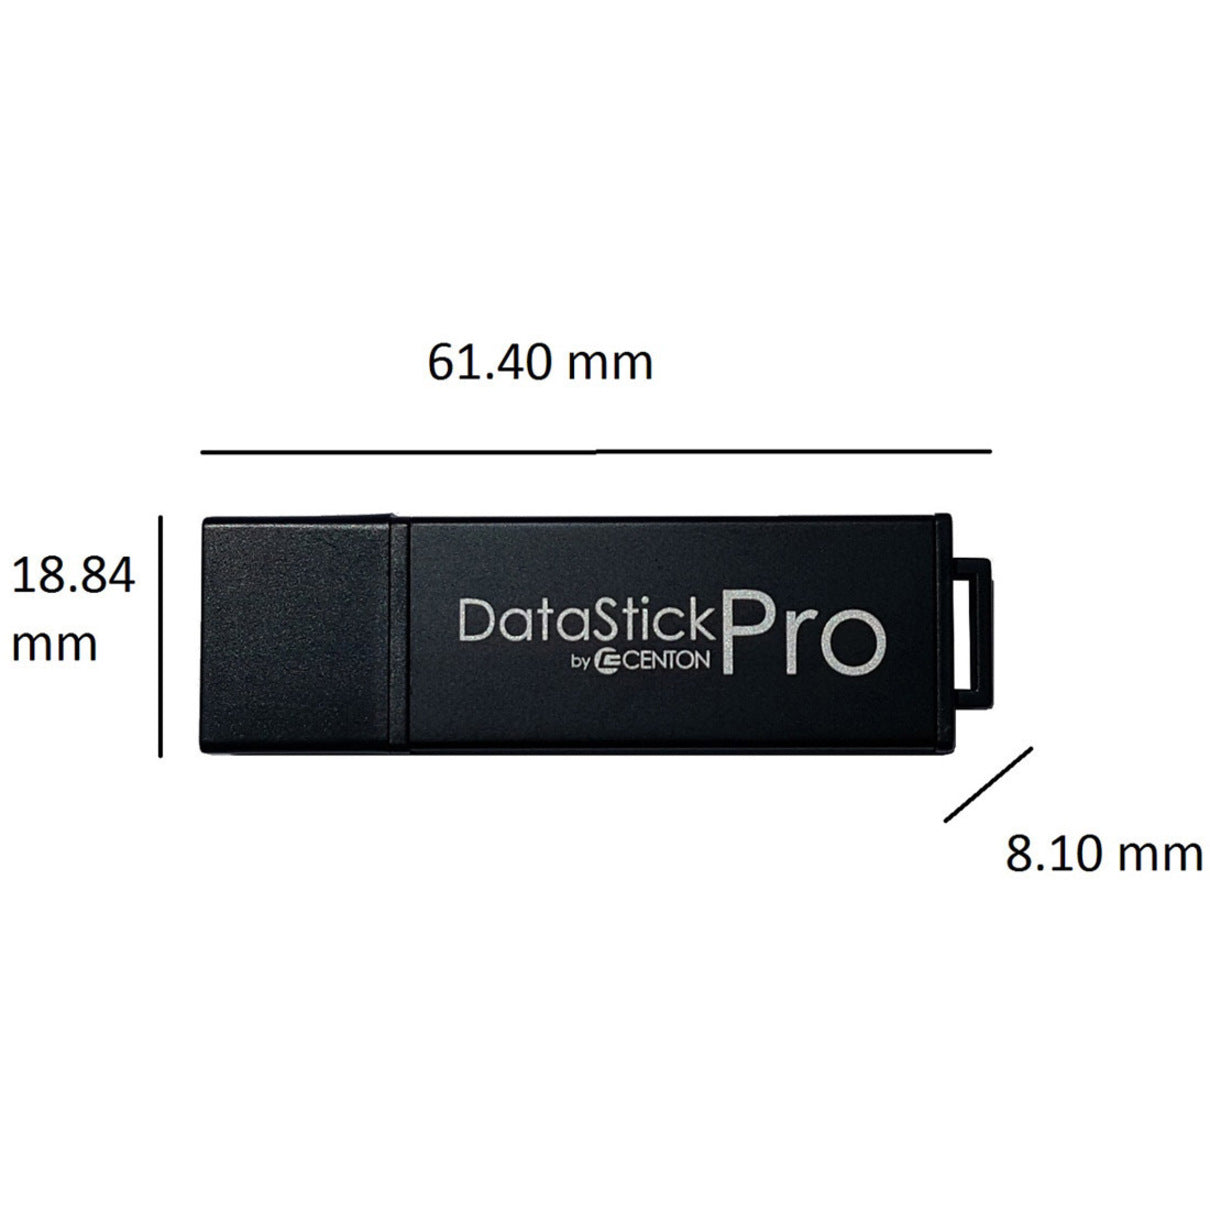 Centon DSP4GB-007 DataStick Pro USB 2.0 Flash Drive 4GB Speicherkapazität